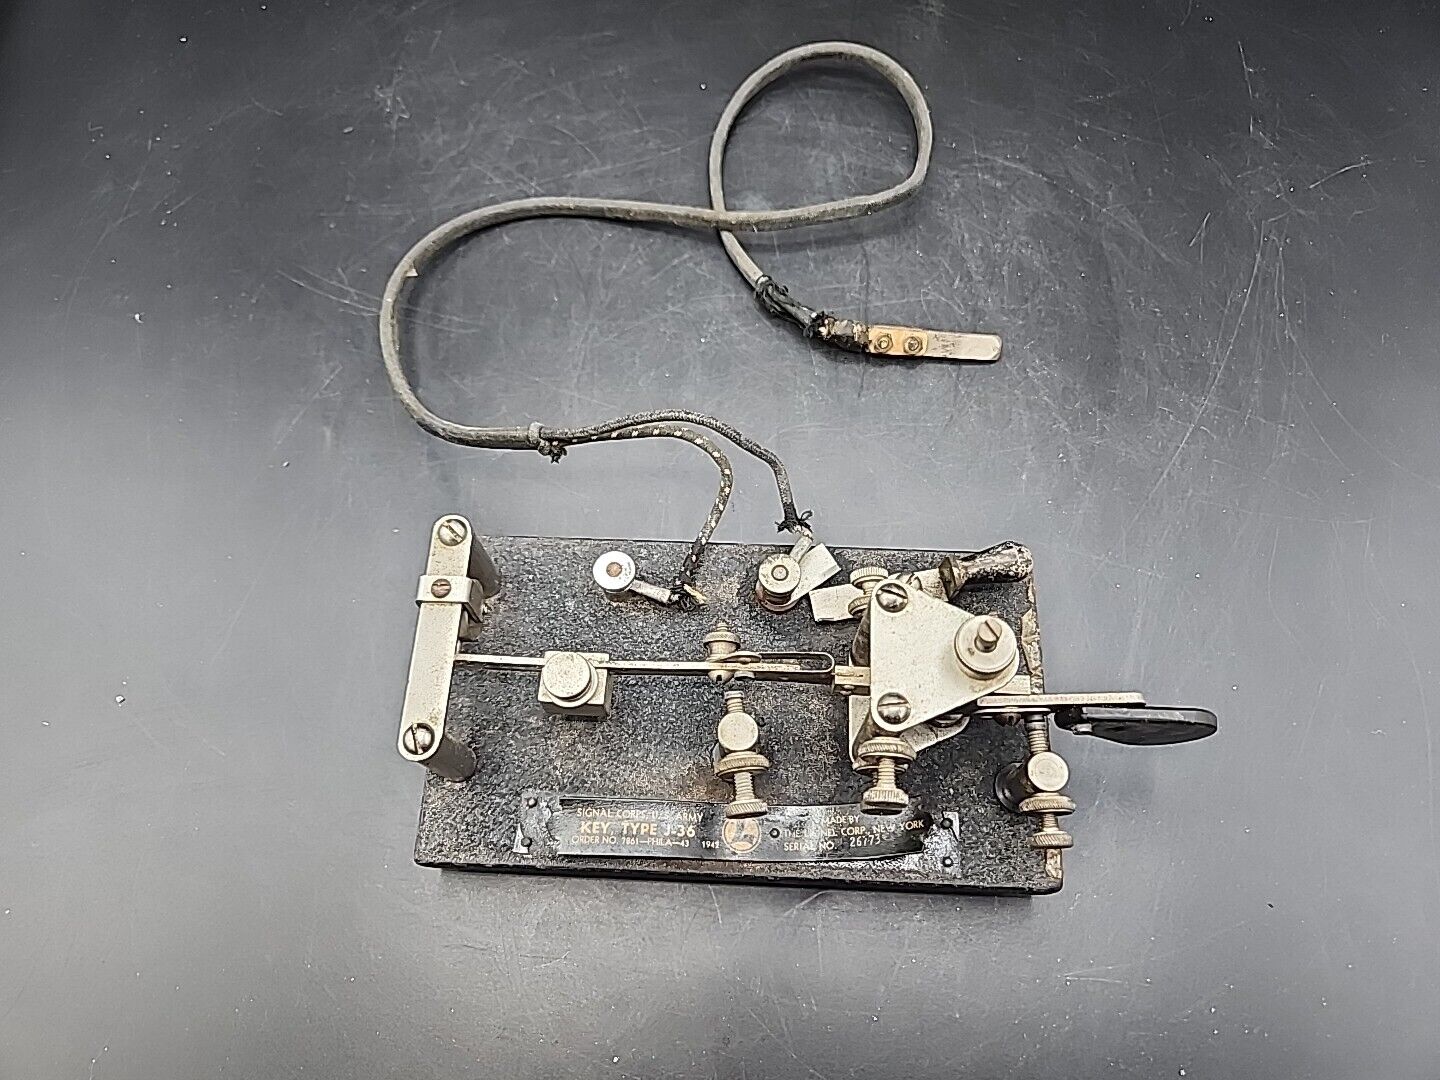 Vintage Lionel US Army Signal Corps Vibroplex Morse Code Telegraph Key Type J-36